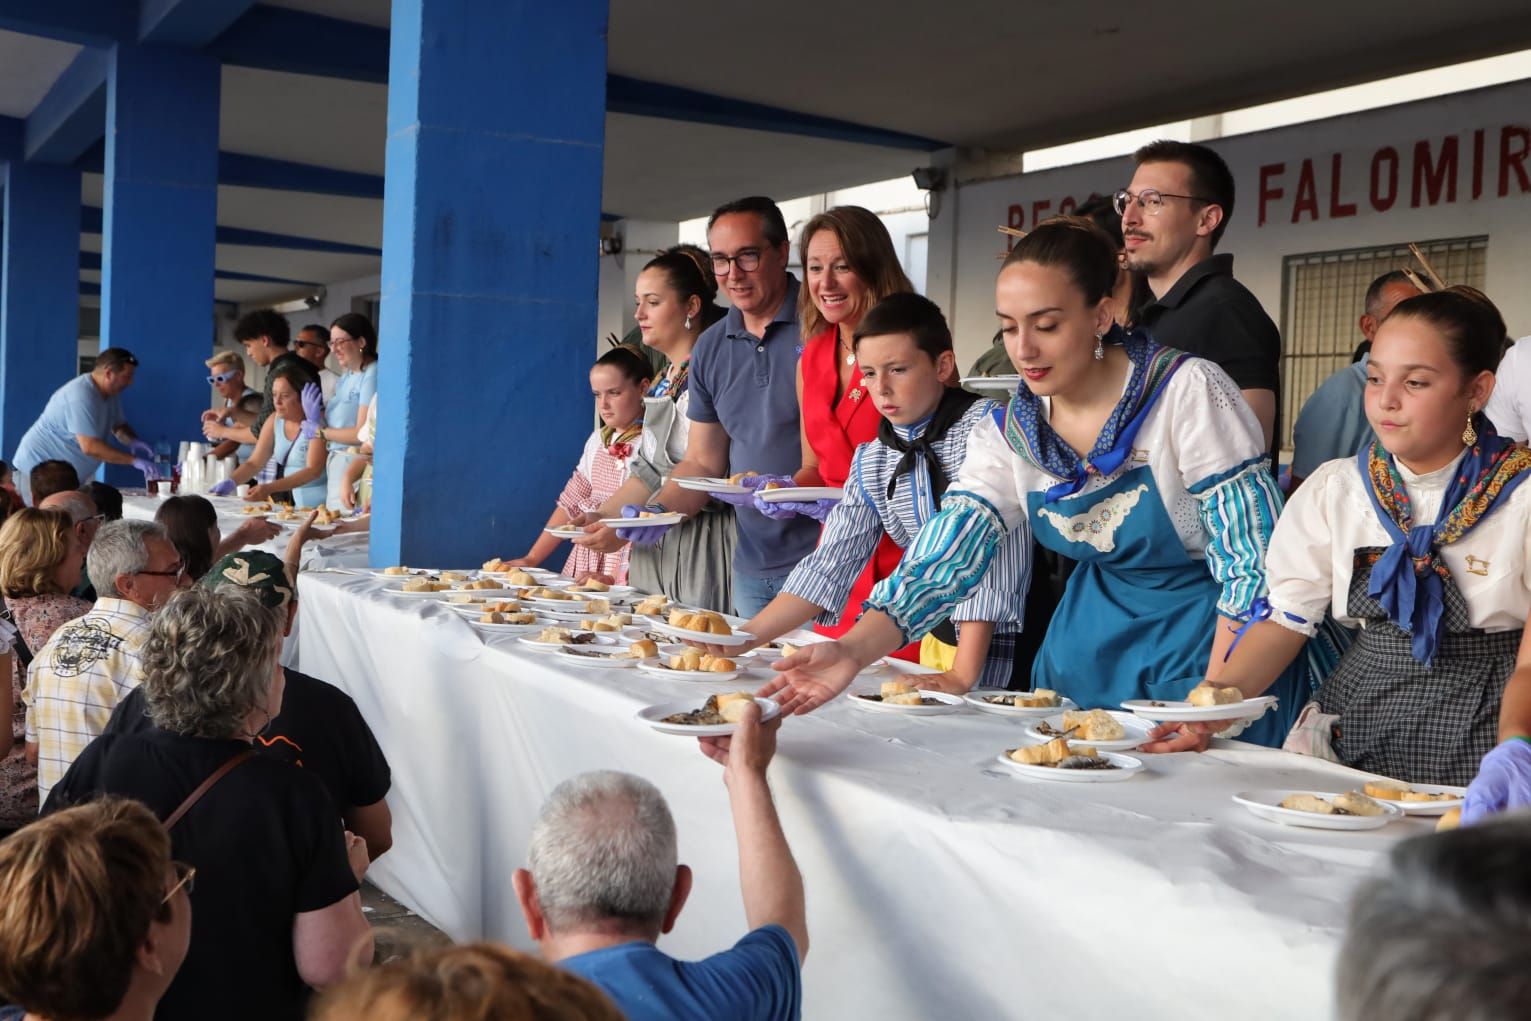 El Grau en fiestas: Sant Pere celebra su tercera jornada